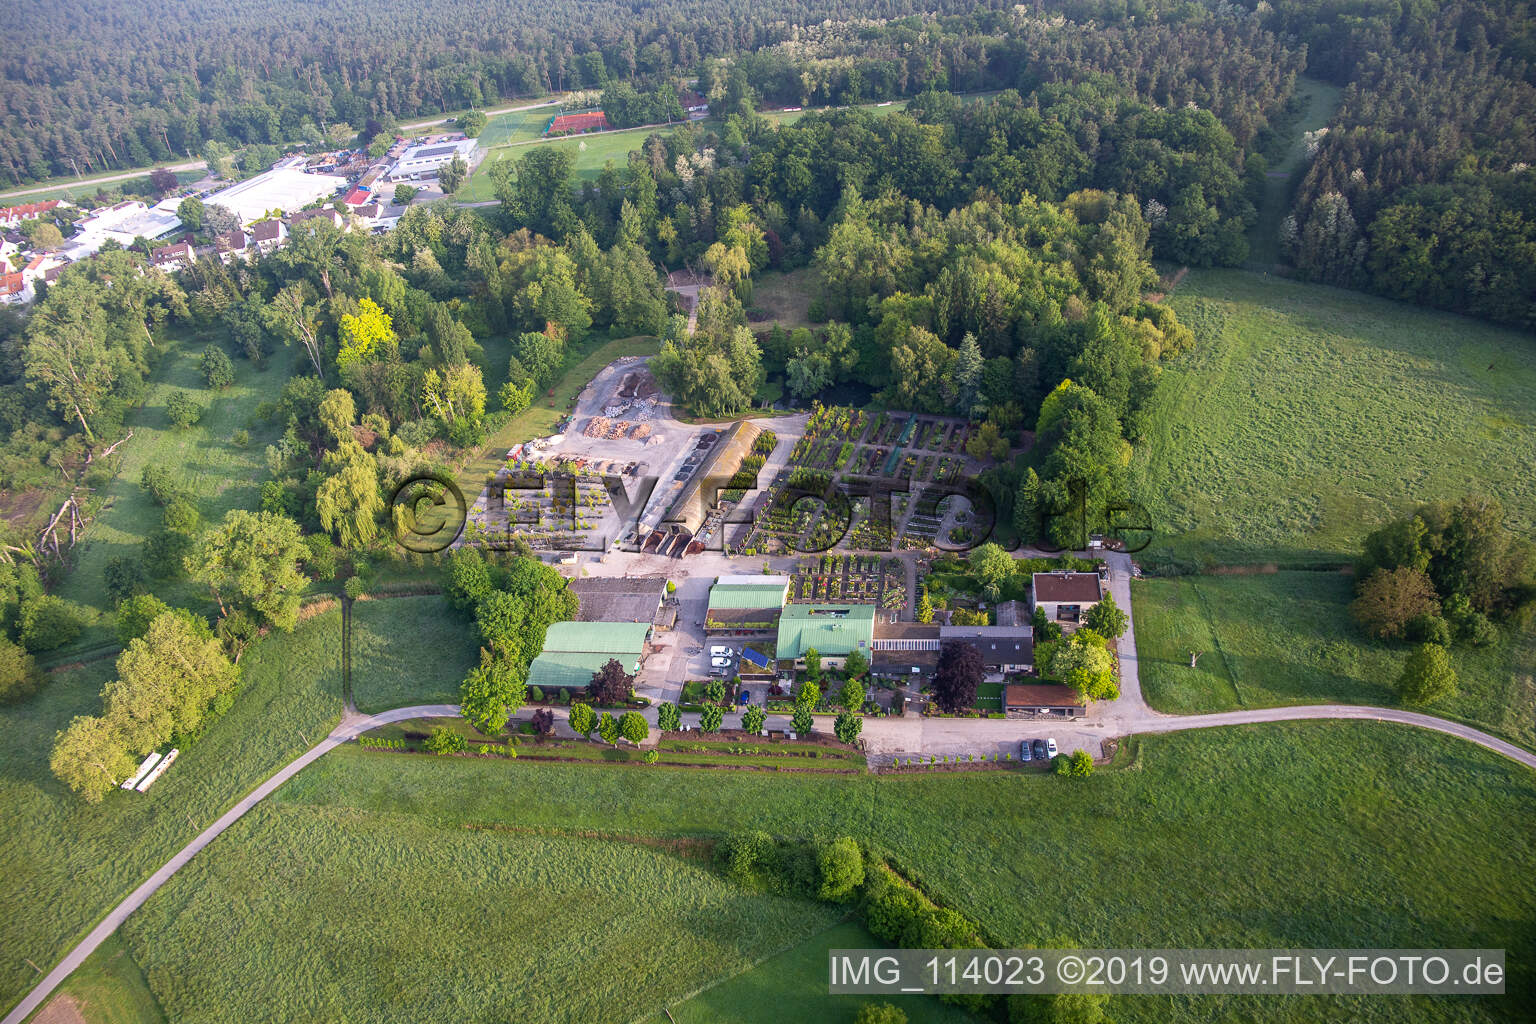 Bienwald tree nursery / Greentec in Berg in the state Rhineland-Palatinate, Germany viewn from the air